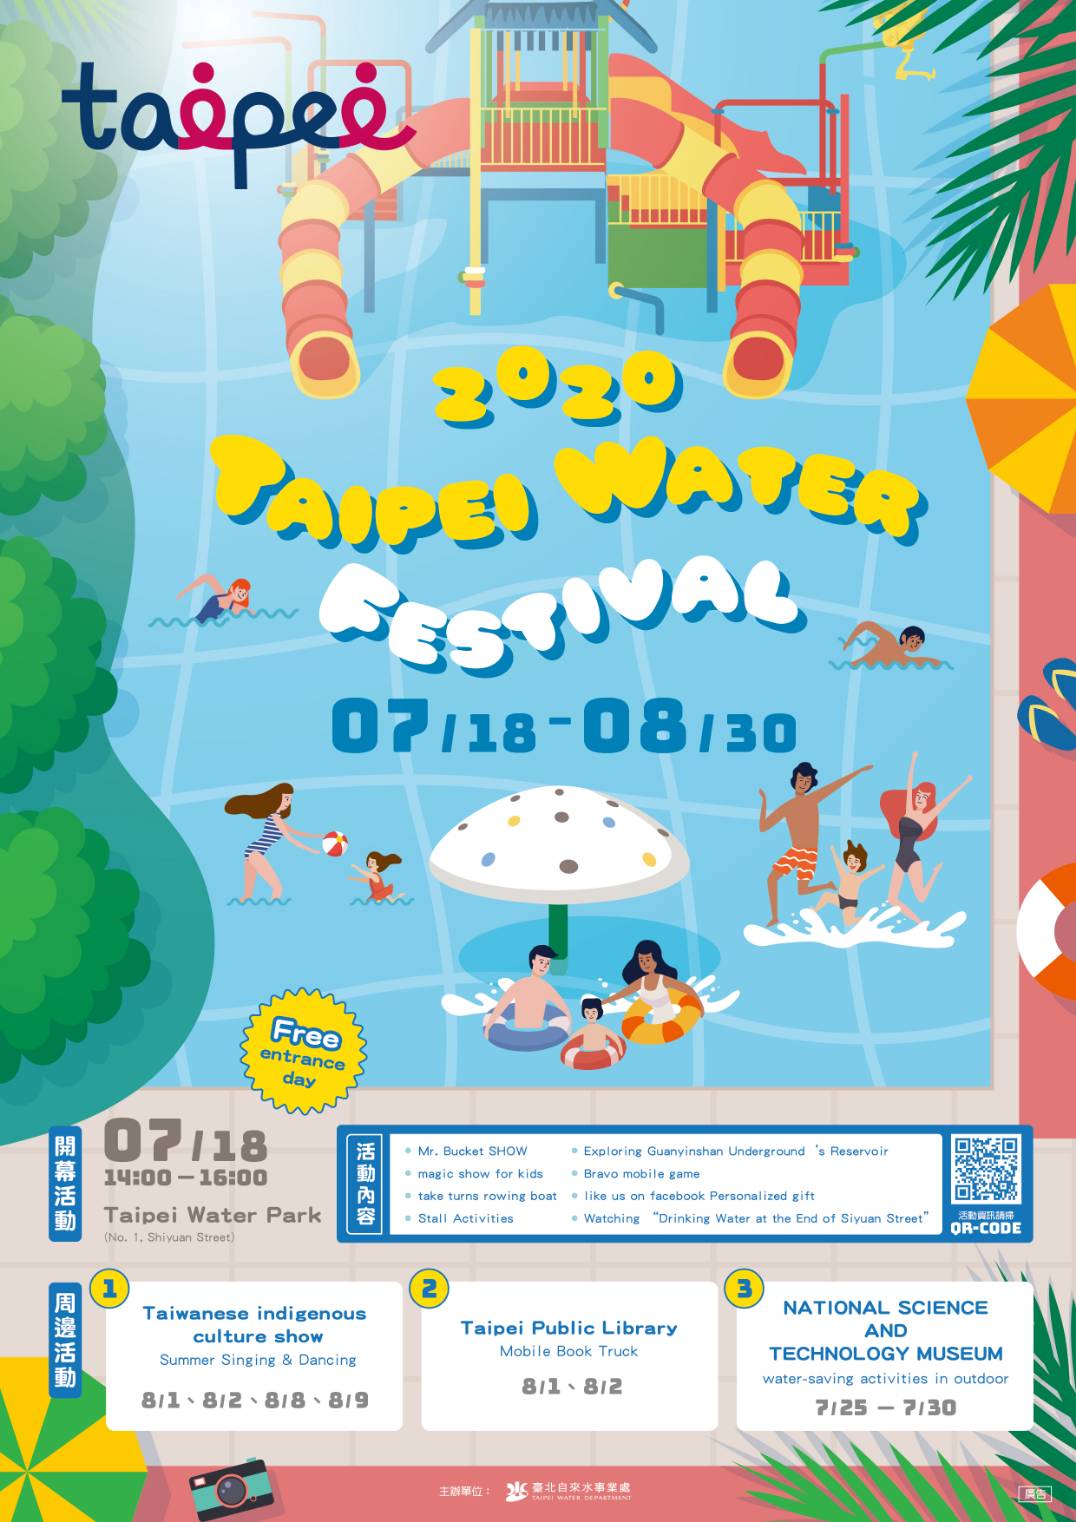 Source: 2020 Taipei Water Festival's Facebook fan page